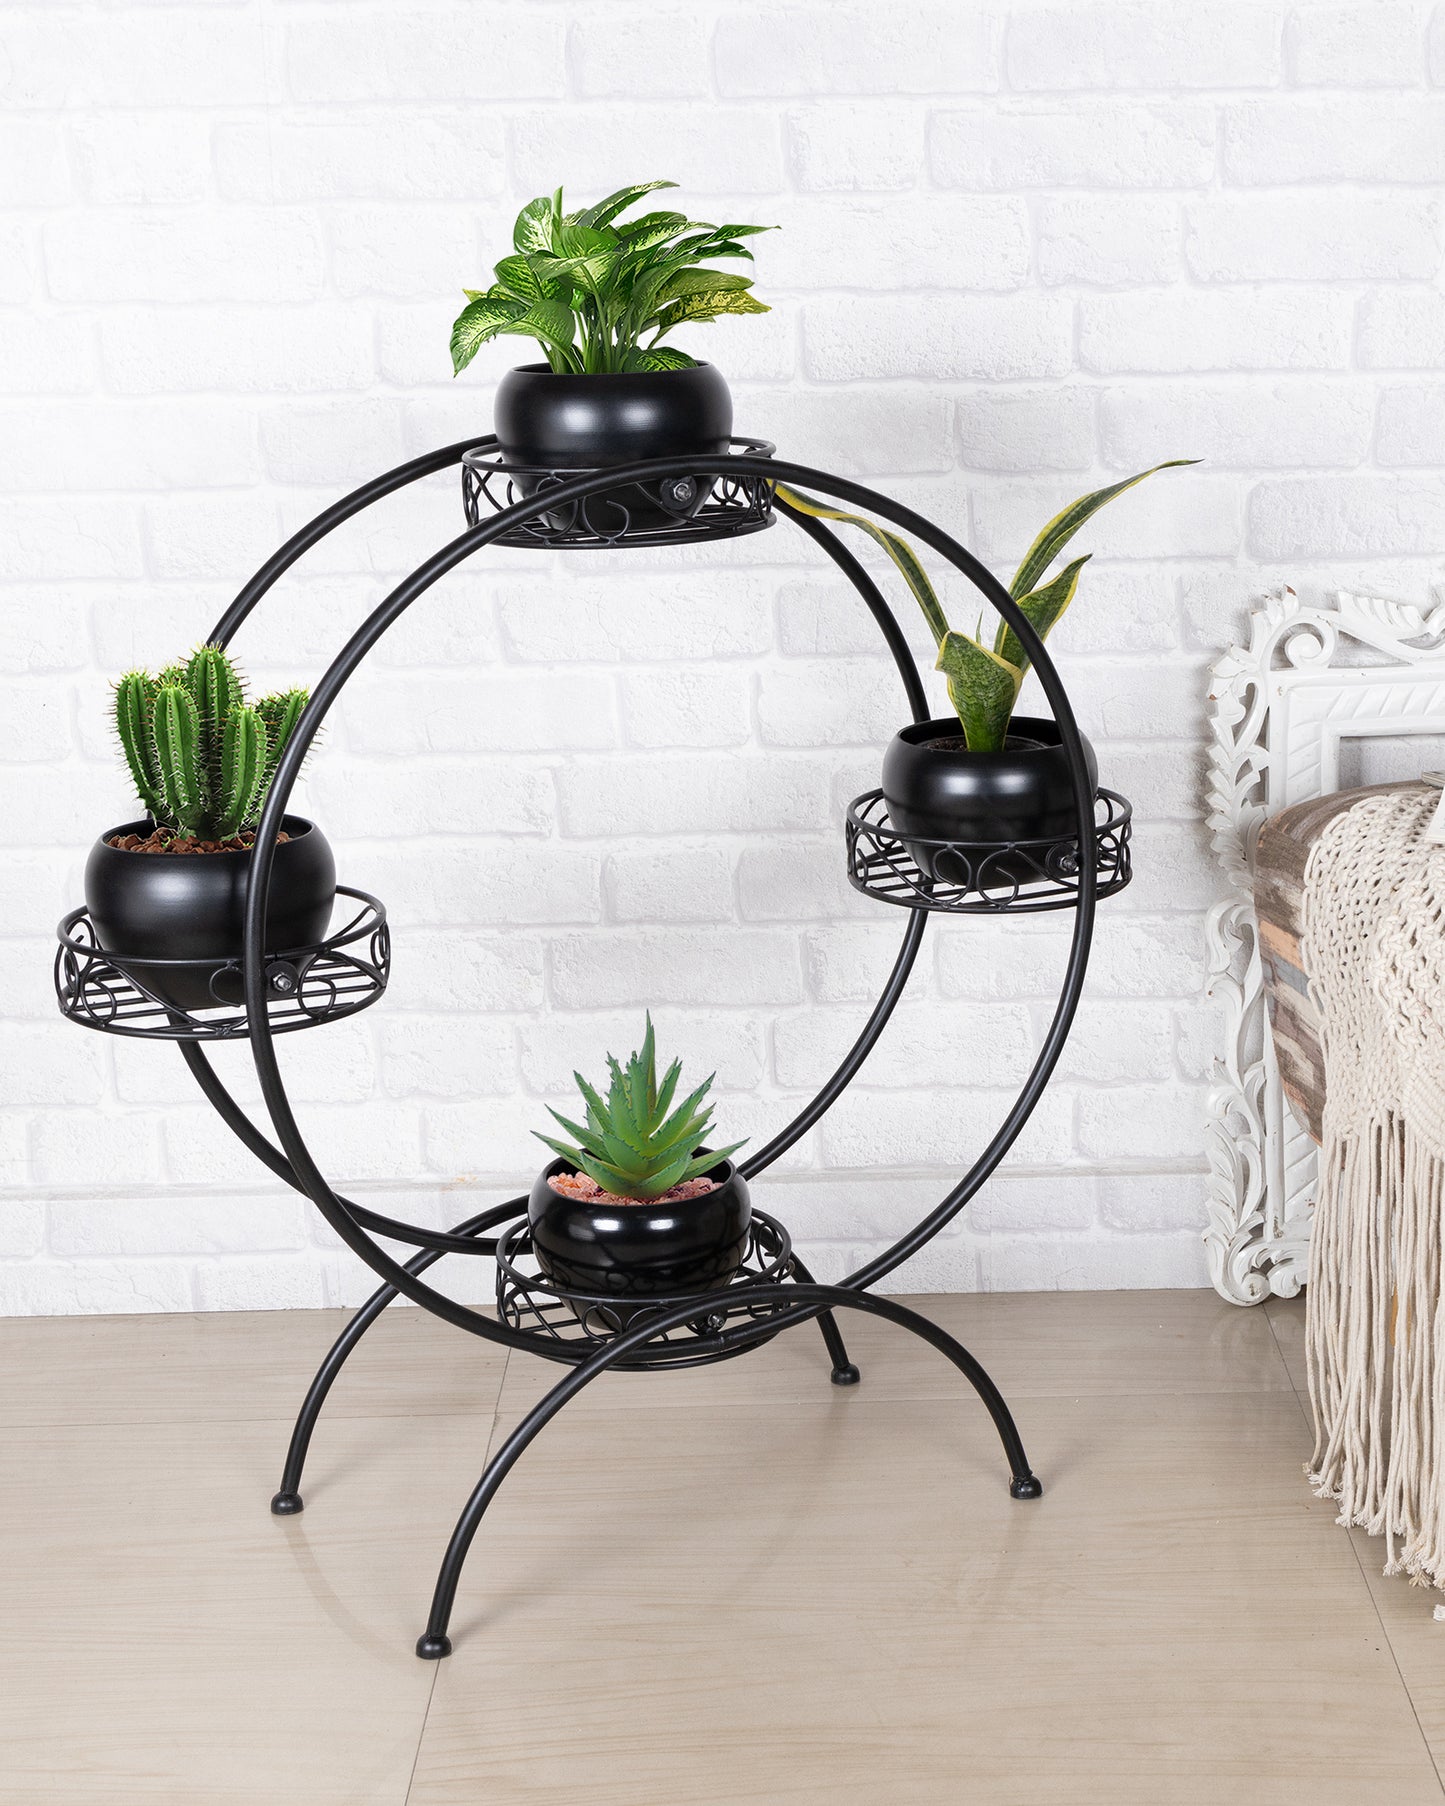 Round Black Plant Stand Metal Flower Holder Racks with 4 Tier With Metal Pot Garden Decoration Planter Rack Shelf Black